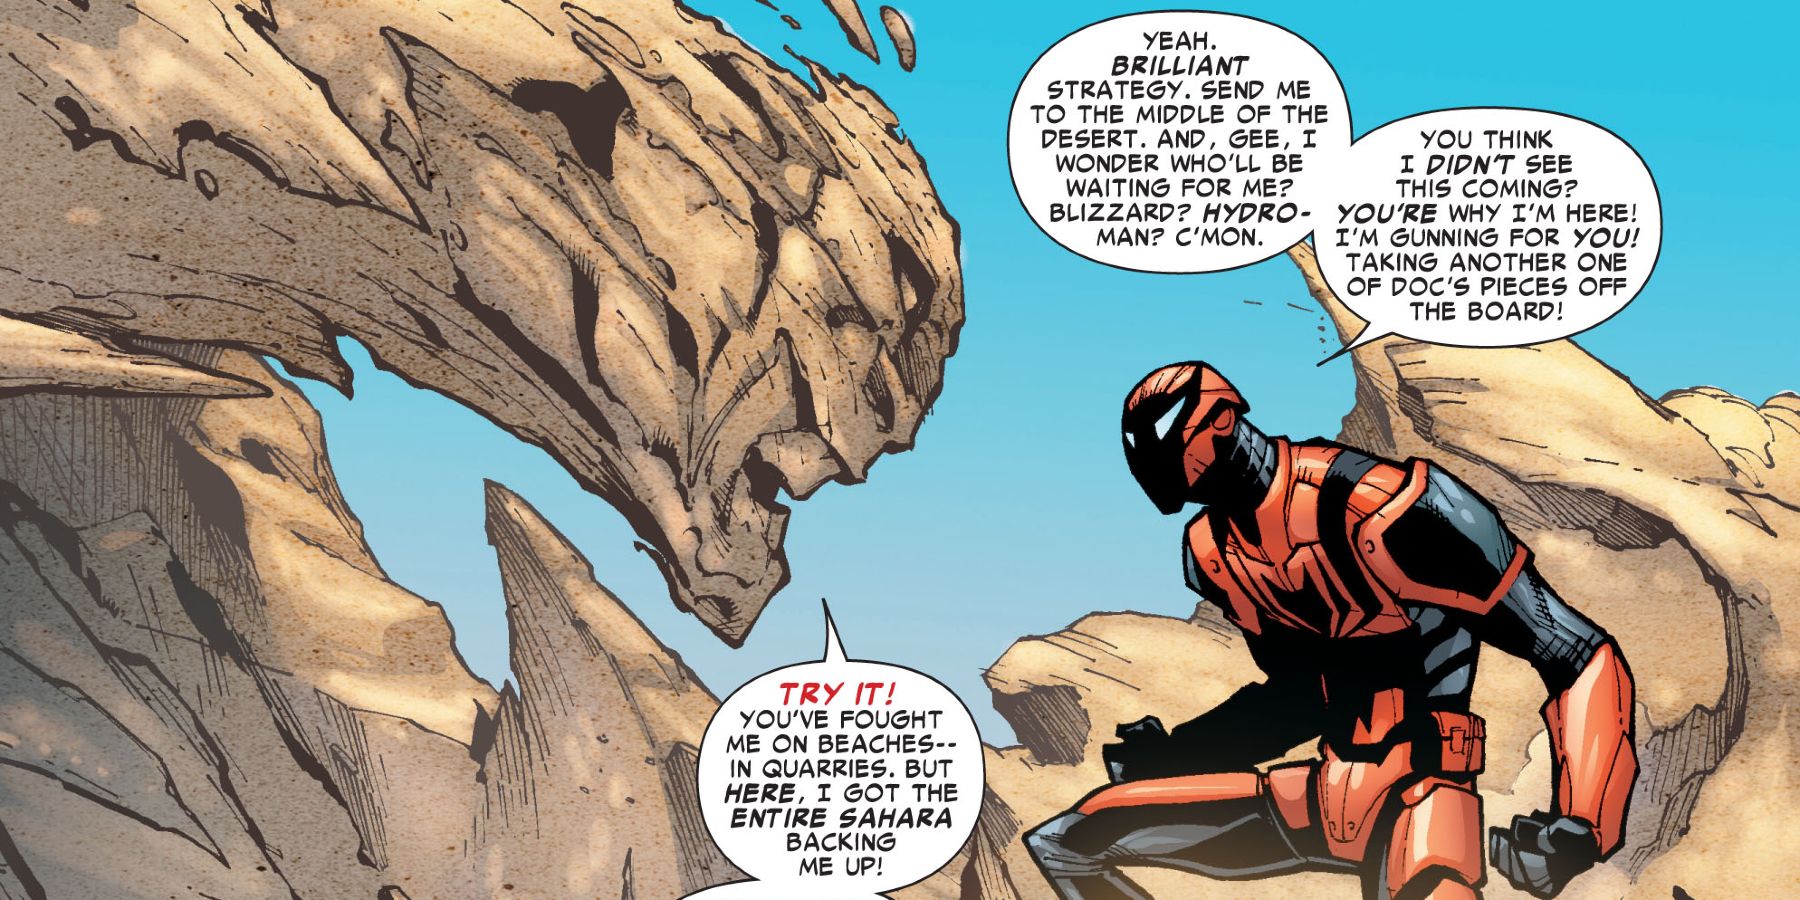 Spider-Man in the Spider-Armor MK III confronting Sandman